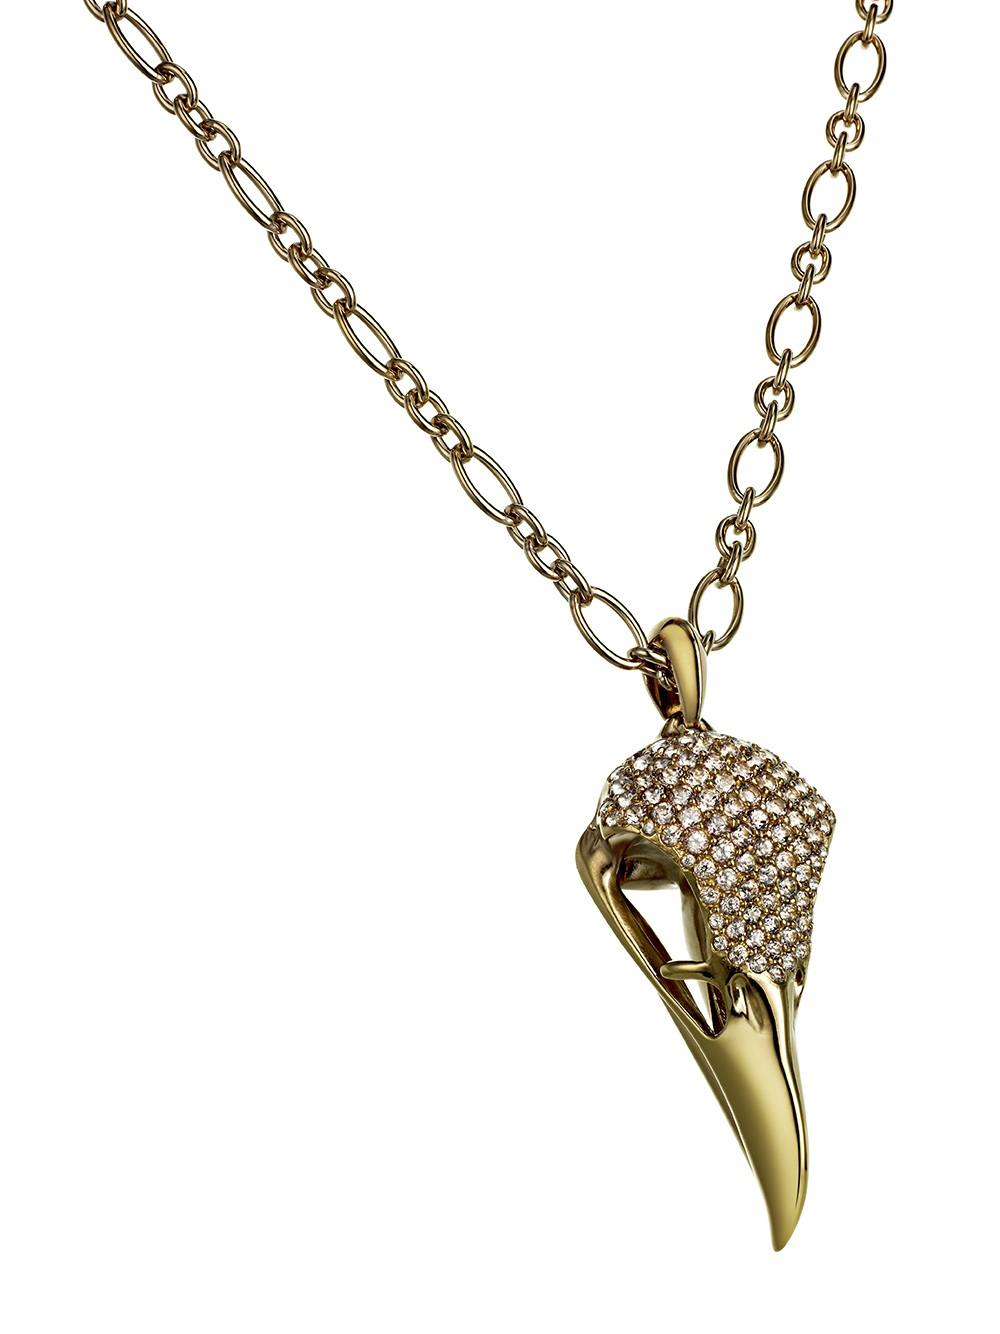 Lyst - Shaun Leane Eagle Skull Pendant Necklace in Metallic